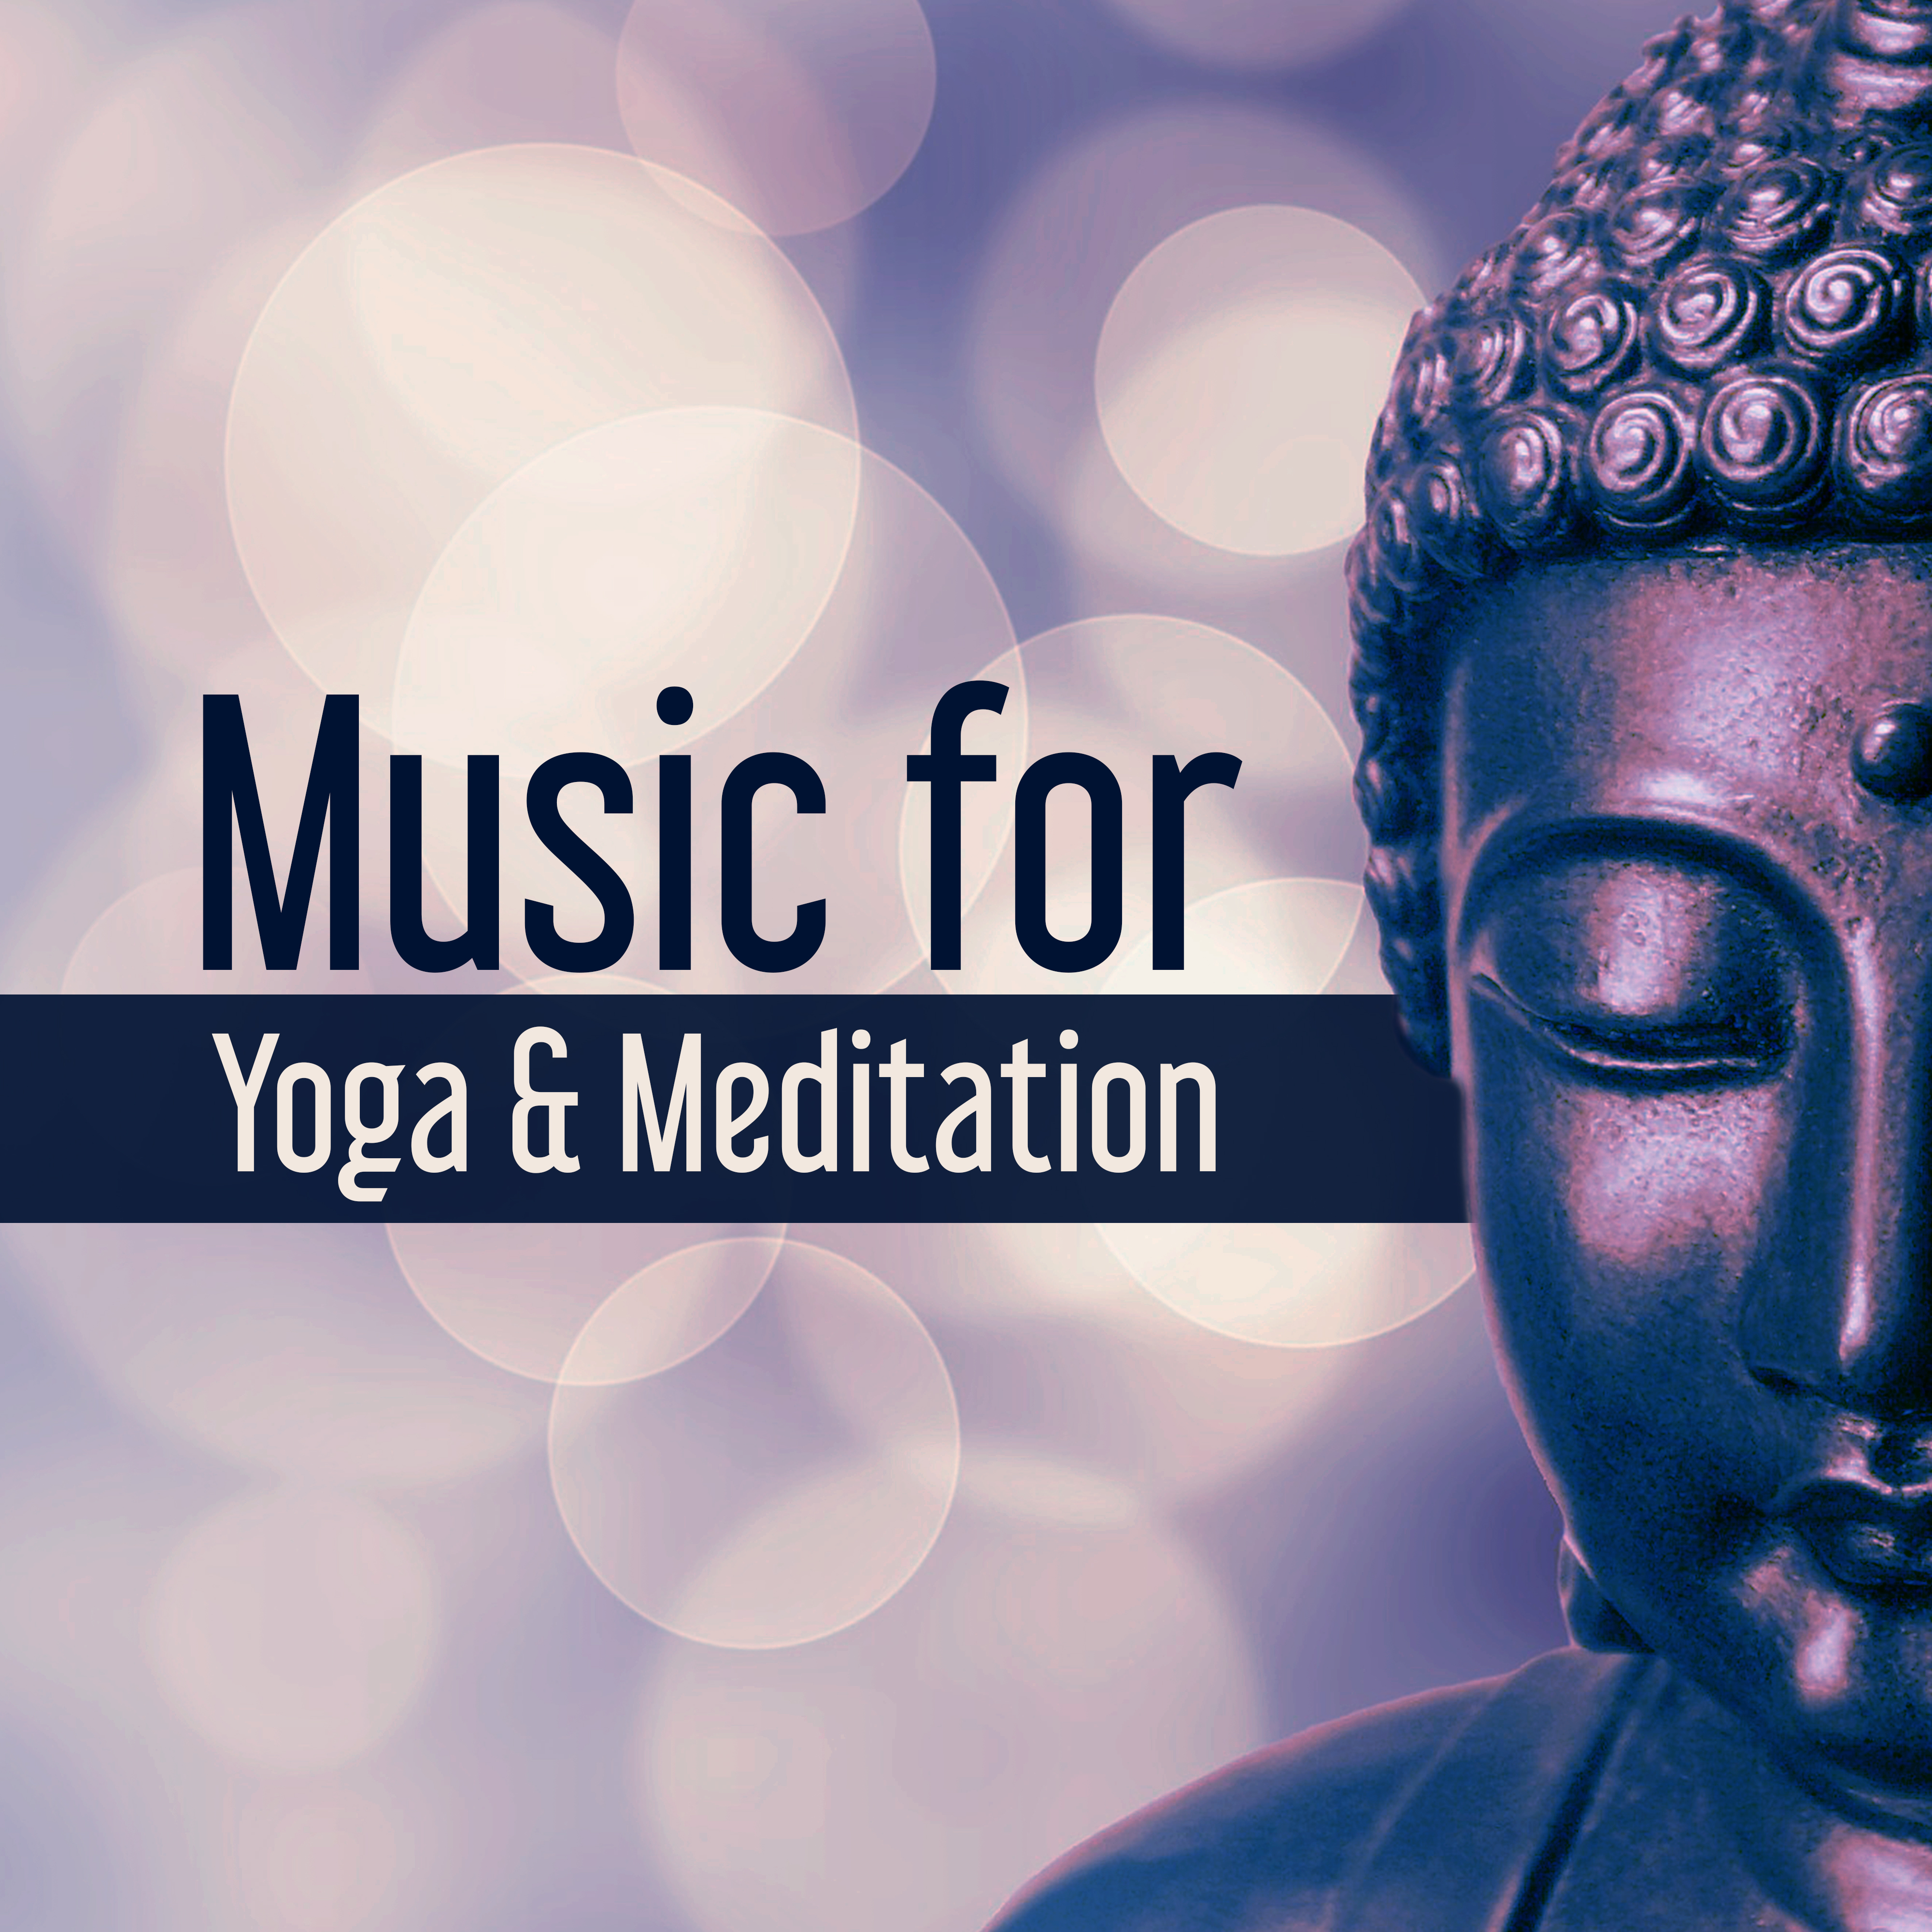 Music for Yoga  Meditation  Sounds for Yoga Training, Rest  Relax, Meditation Awareness, New Age Calmness